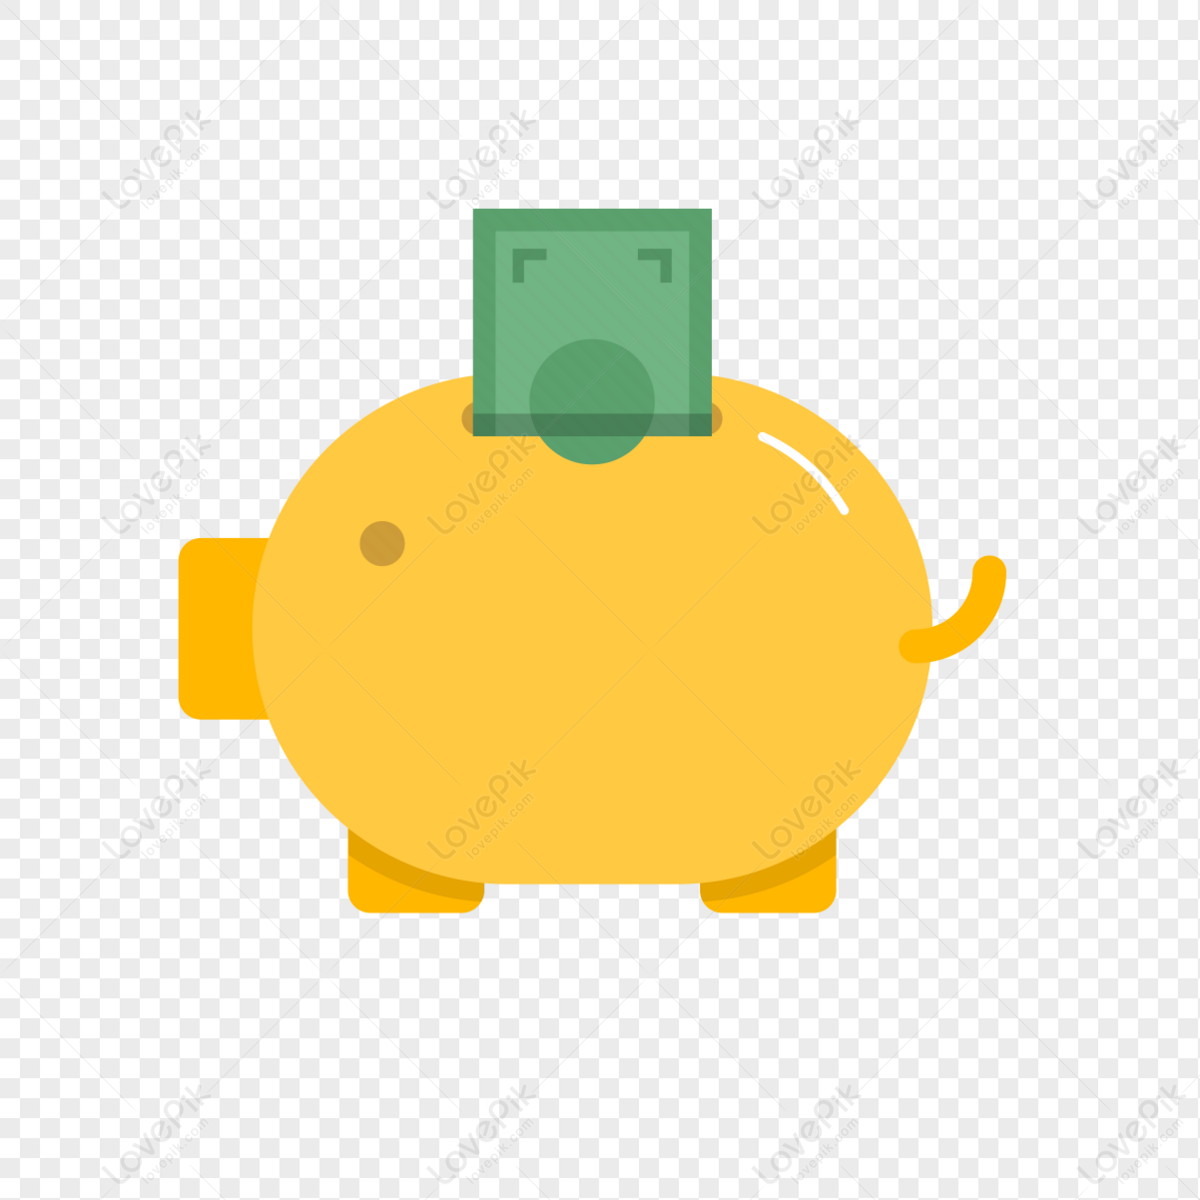 piggy bank vector free download